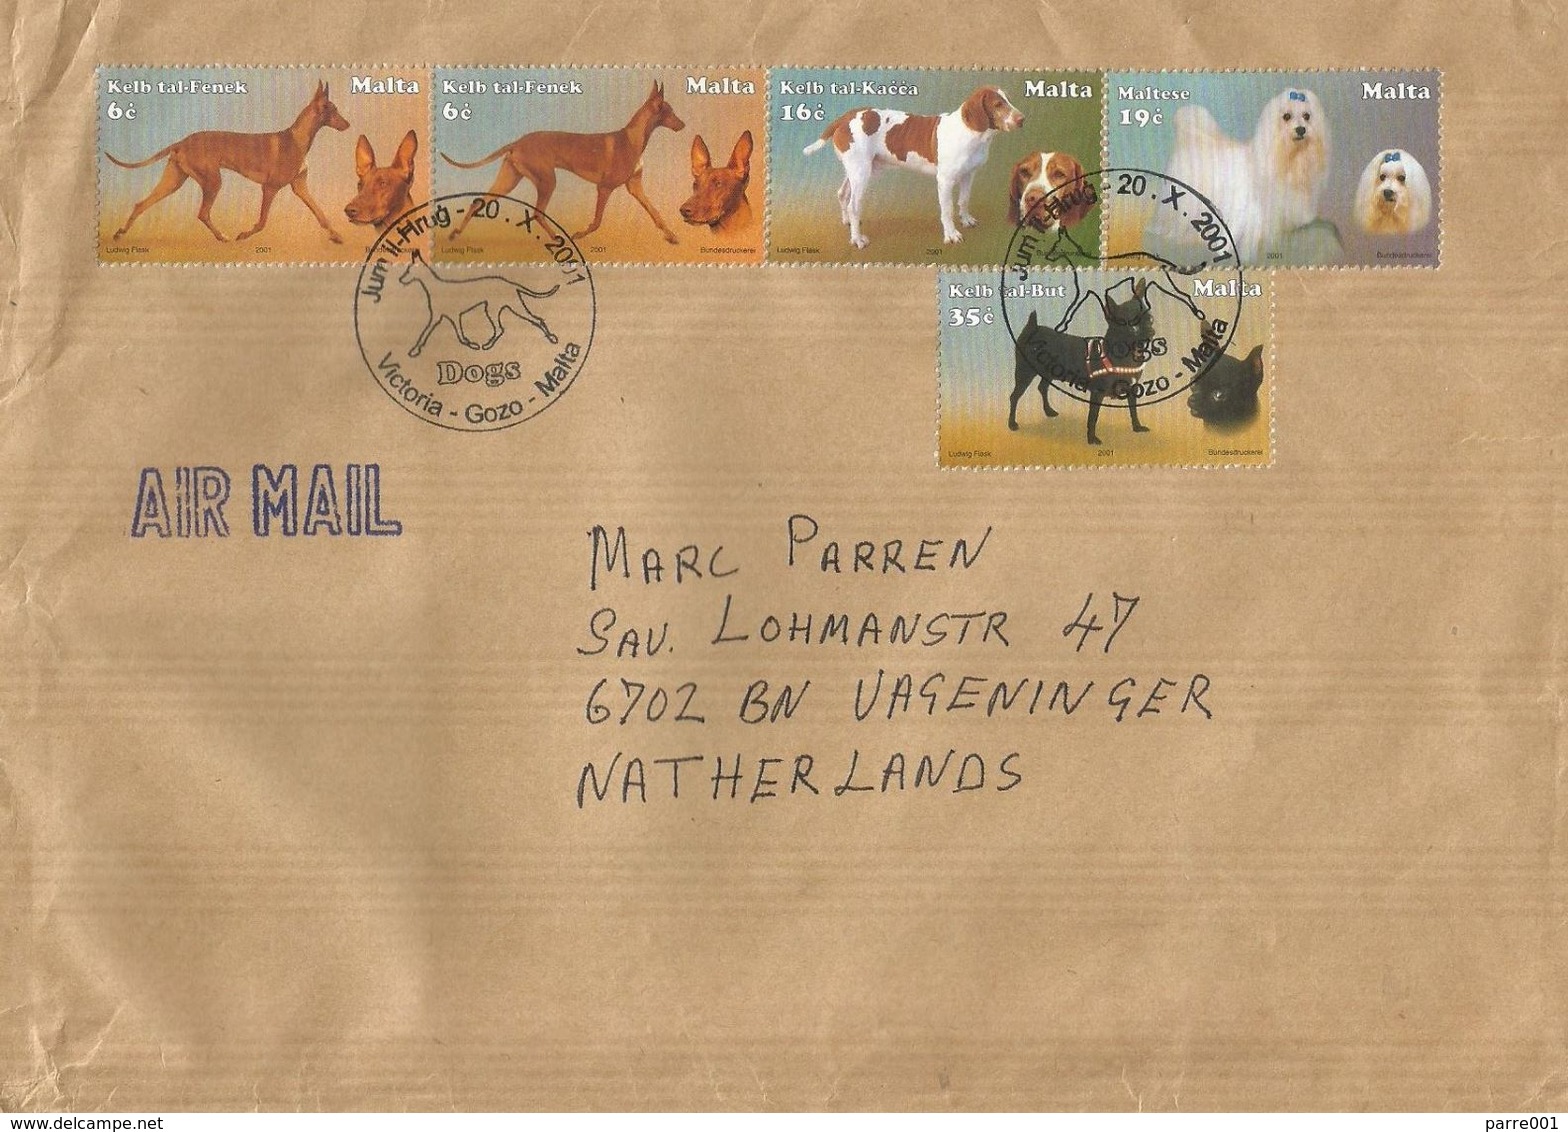 Malta 2001 Victoria Gozo Maltese Dogs FDC Postmark Cover - Honden